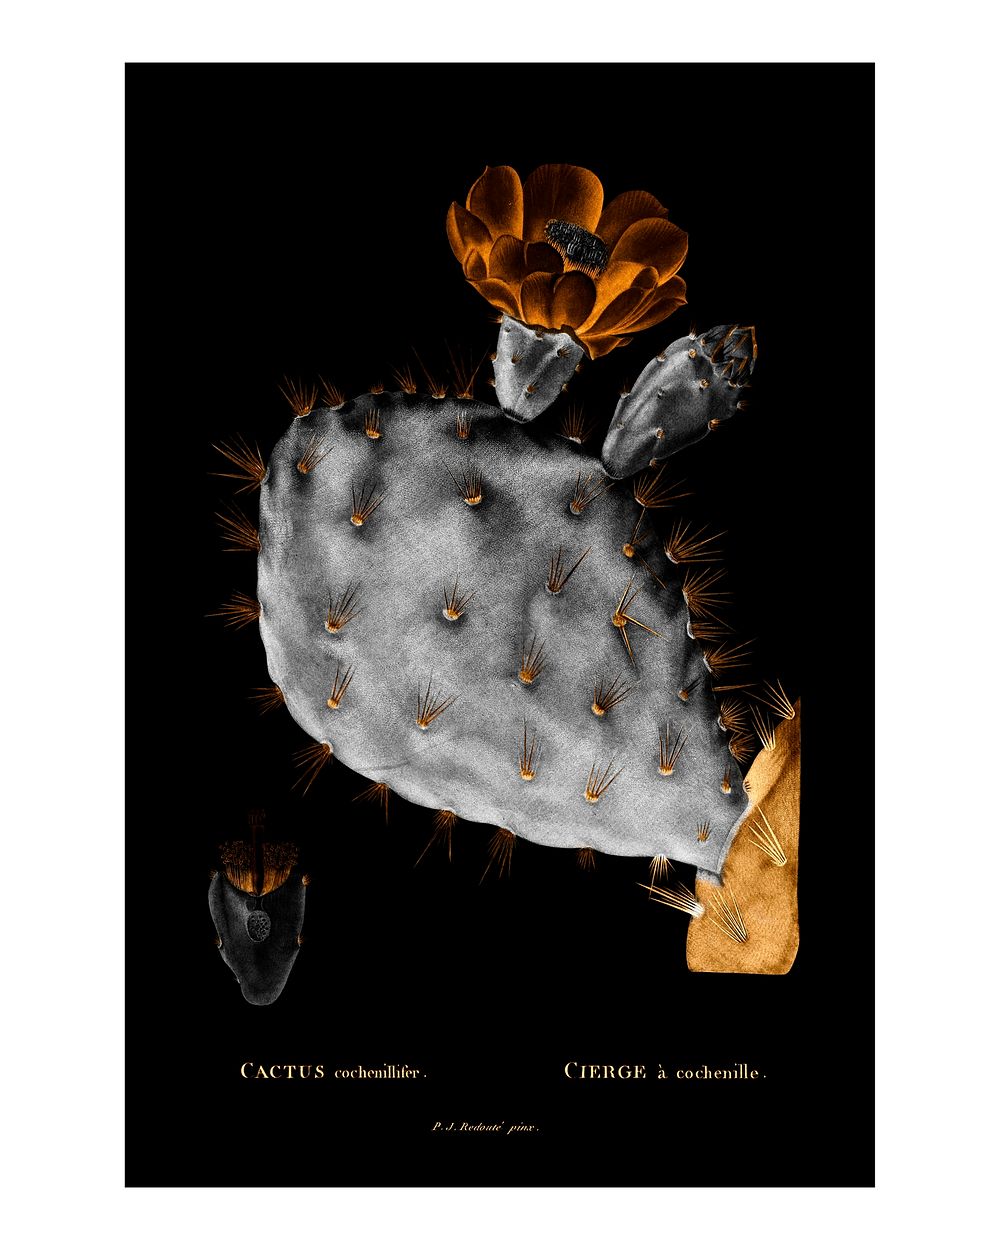 Negative effect prickly pear cactus vintage illustration, remix from original artwork.